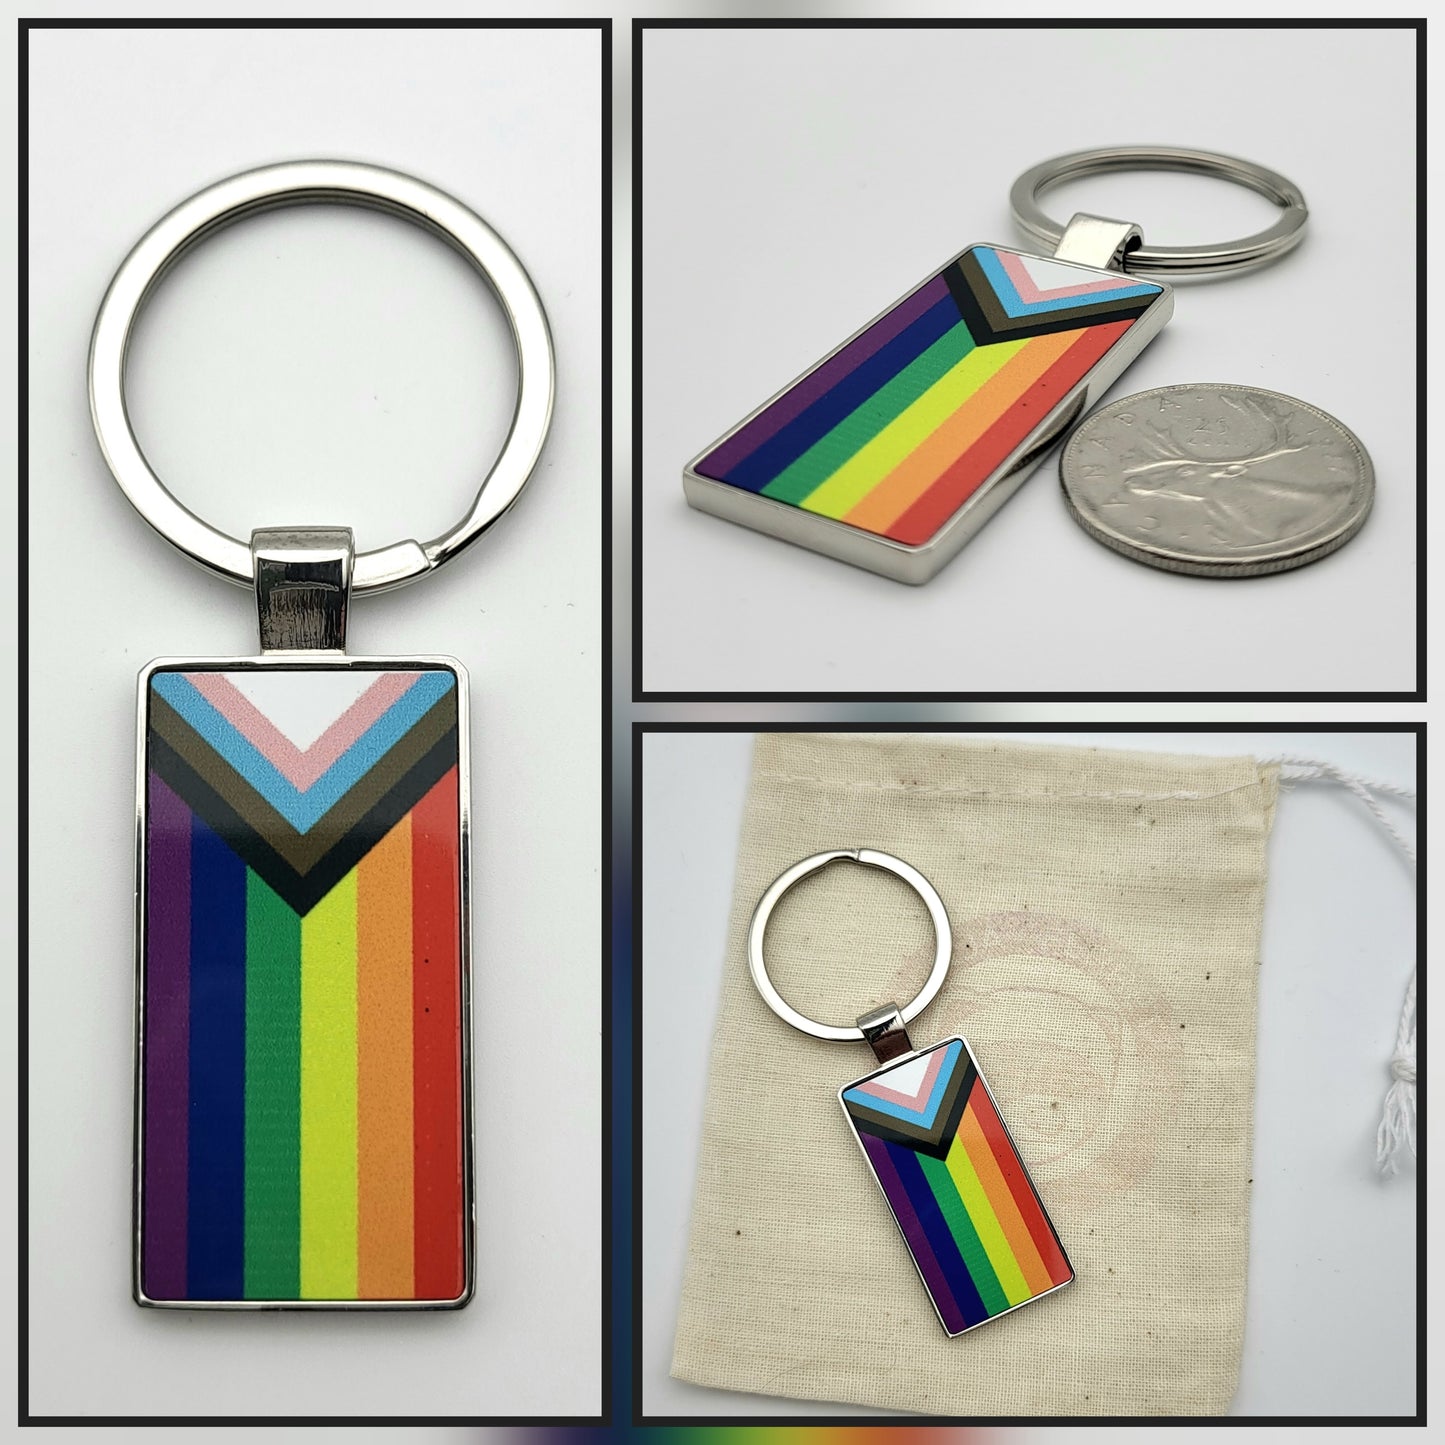 3 Views of a metal keychain. It has a rainbow progress flag design.